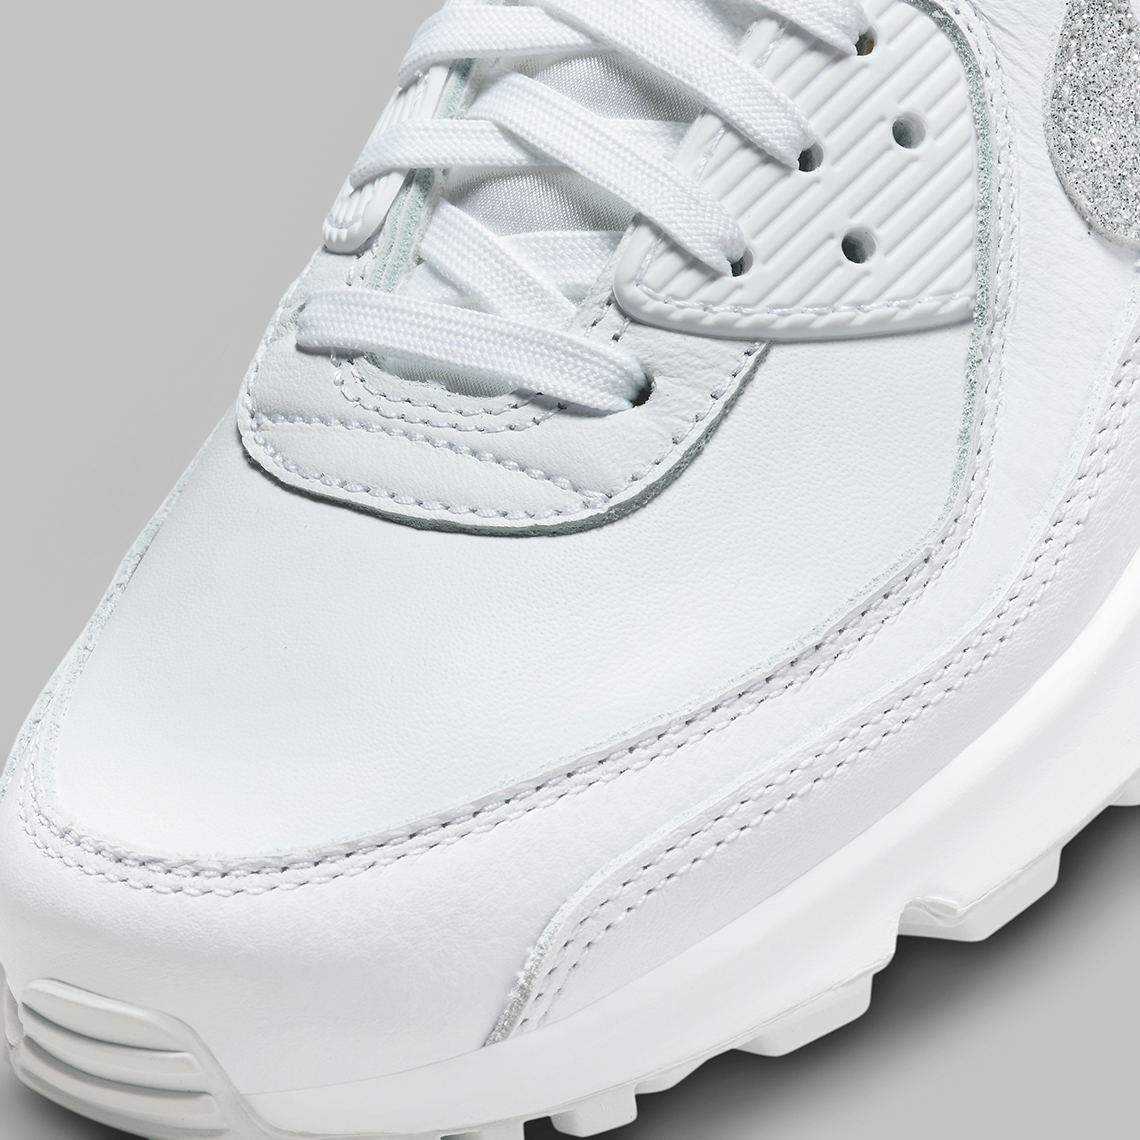 Nike Air Max 90 Ultra Essential White/White-Metallic Silver 724981 101 Wmn  Sz 7